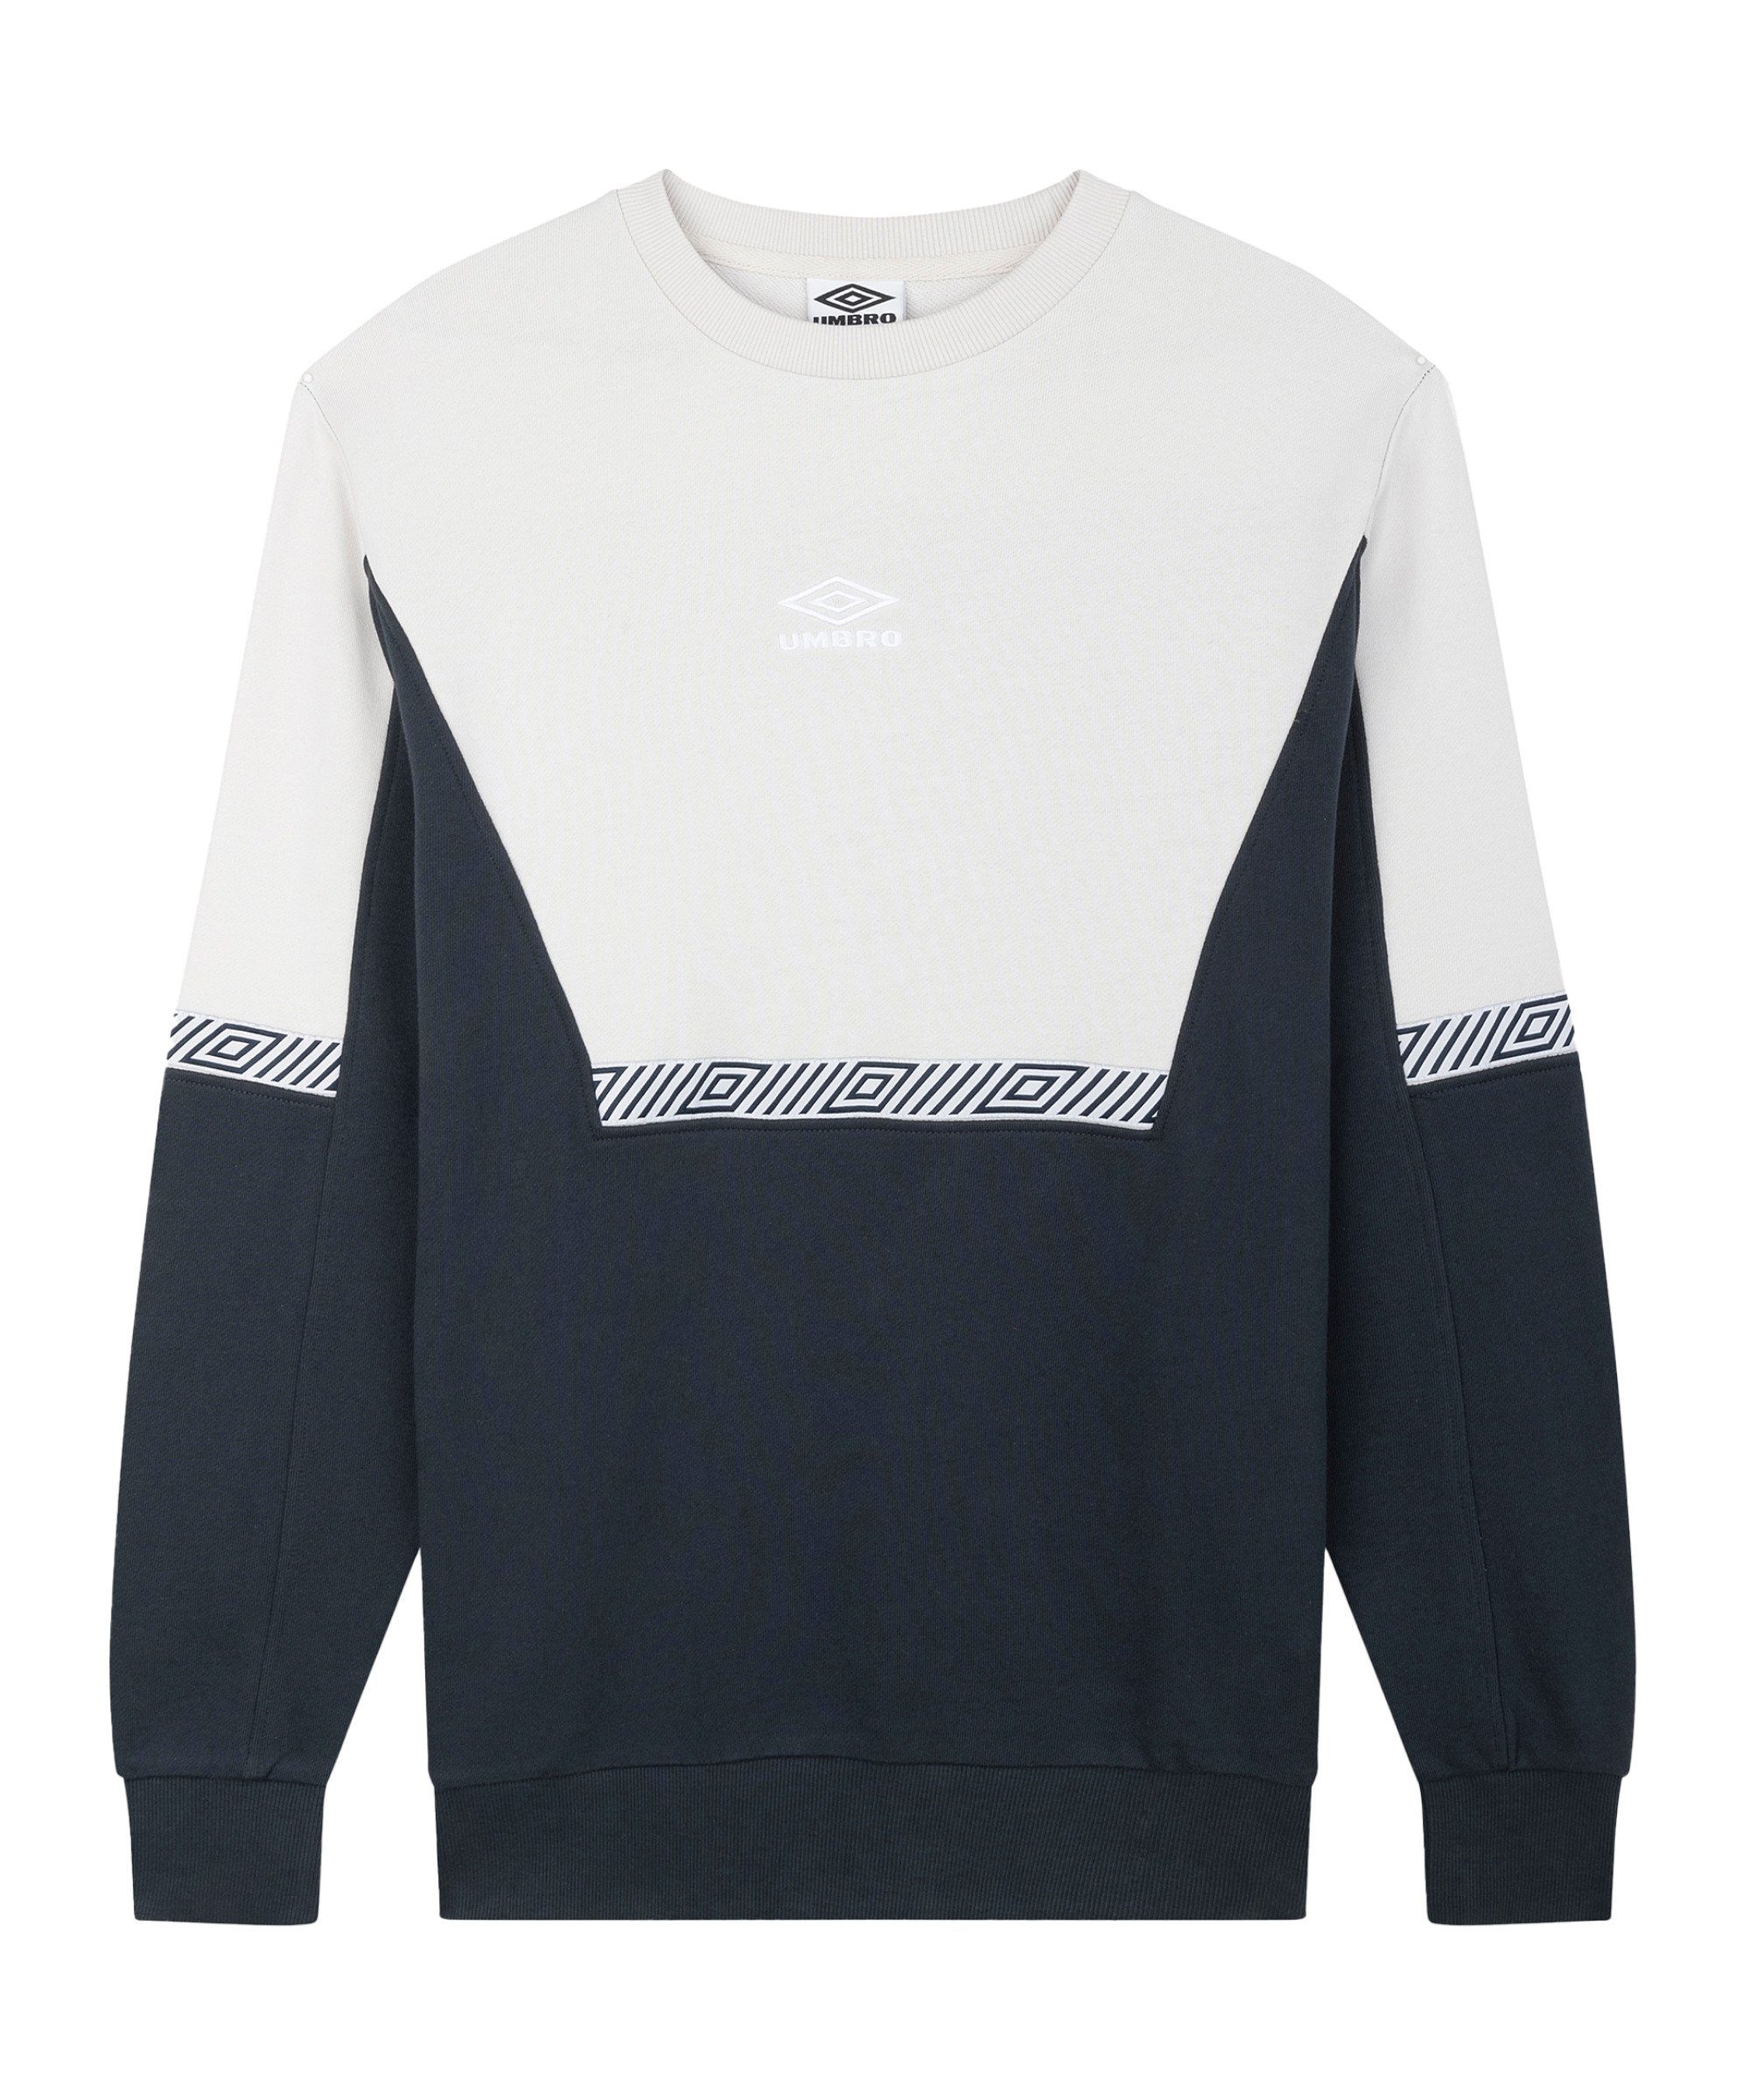 Umbro Sweatshirt Sports Style Club Sweatshirt graublau